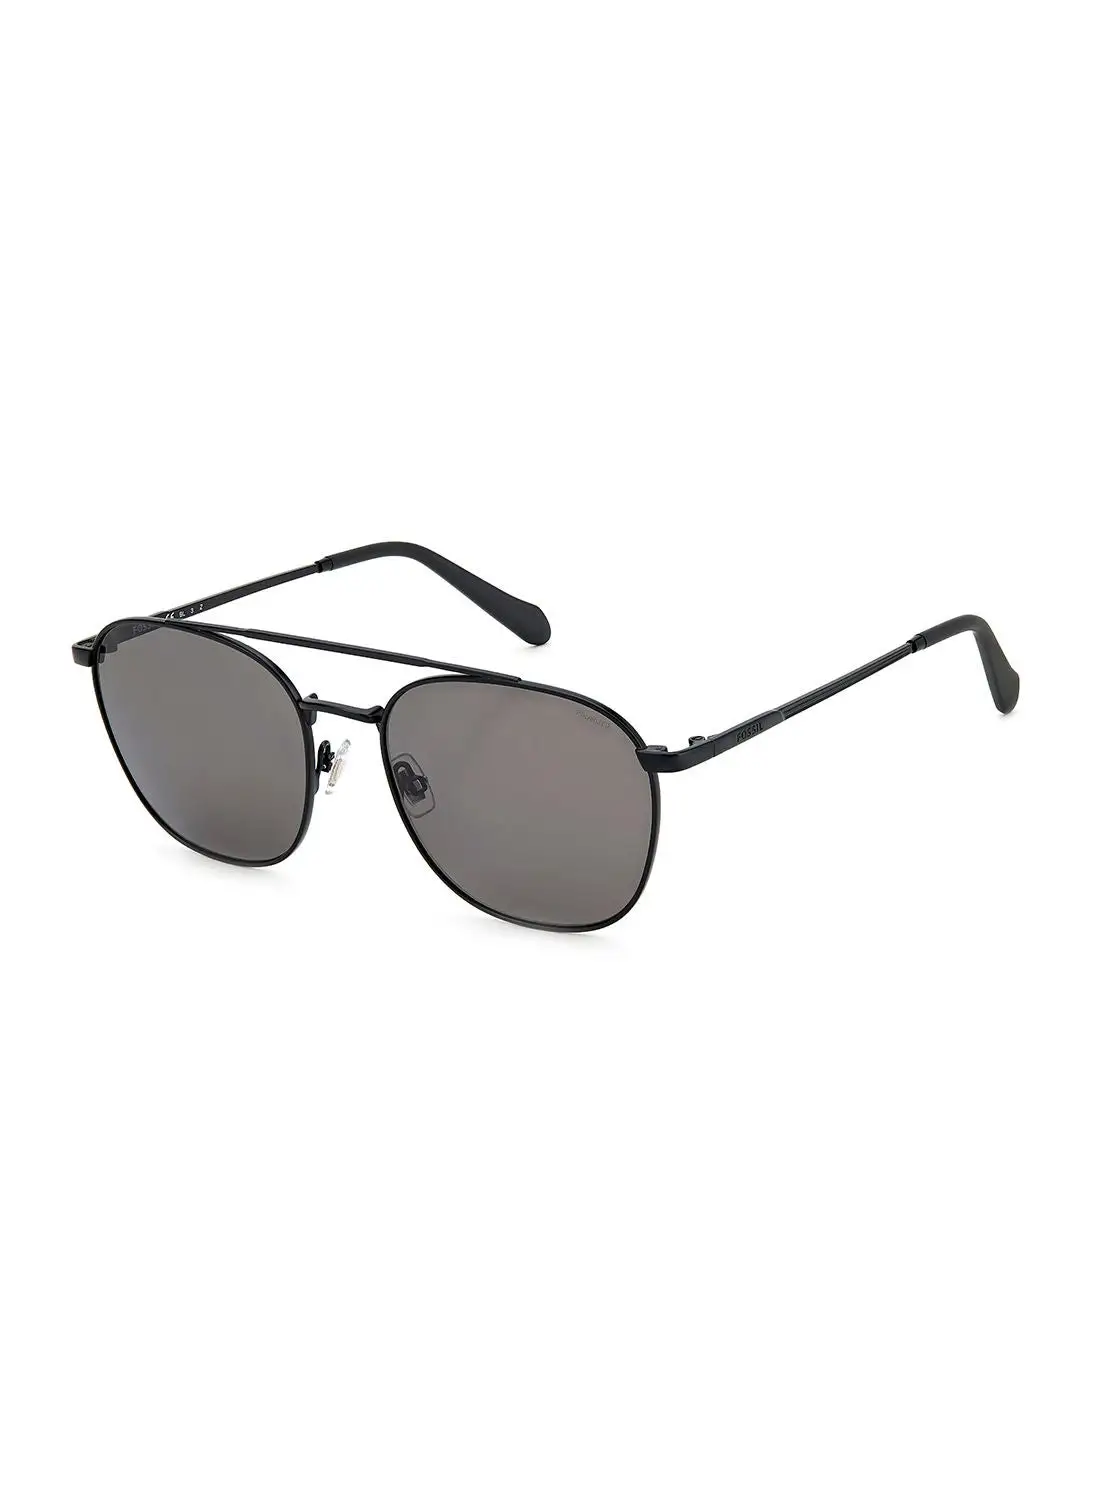 FOSSIL Men's UV Protection Round Sunglasses - Fos 3139/G/S Mtt Black 56 - Lens Size: 56 Mm